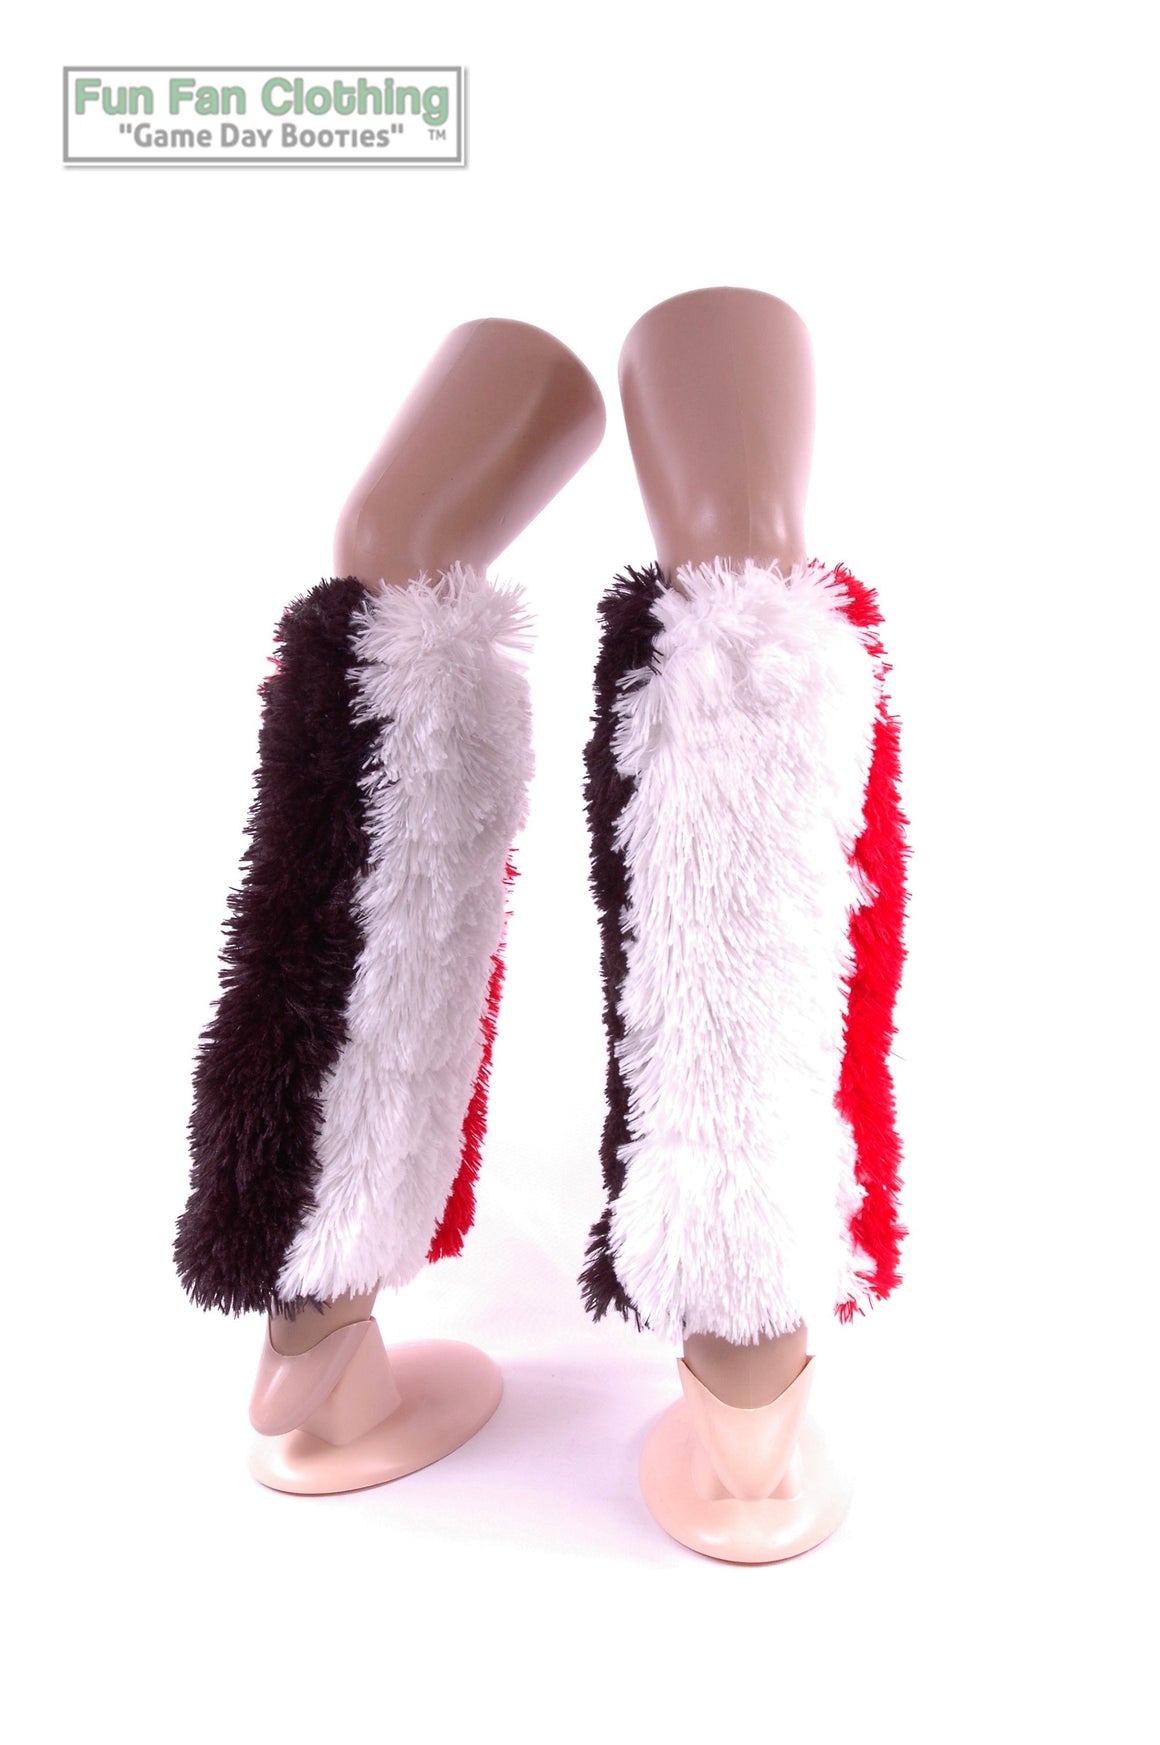 Shaggy Black, Red & White Faux Fur Leg Warmers Tricolor - Game Day Booties-Game Day Booties (Leg Warmers)-Fun Fan Clothing Inc. 